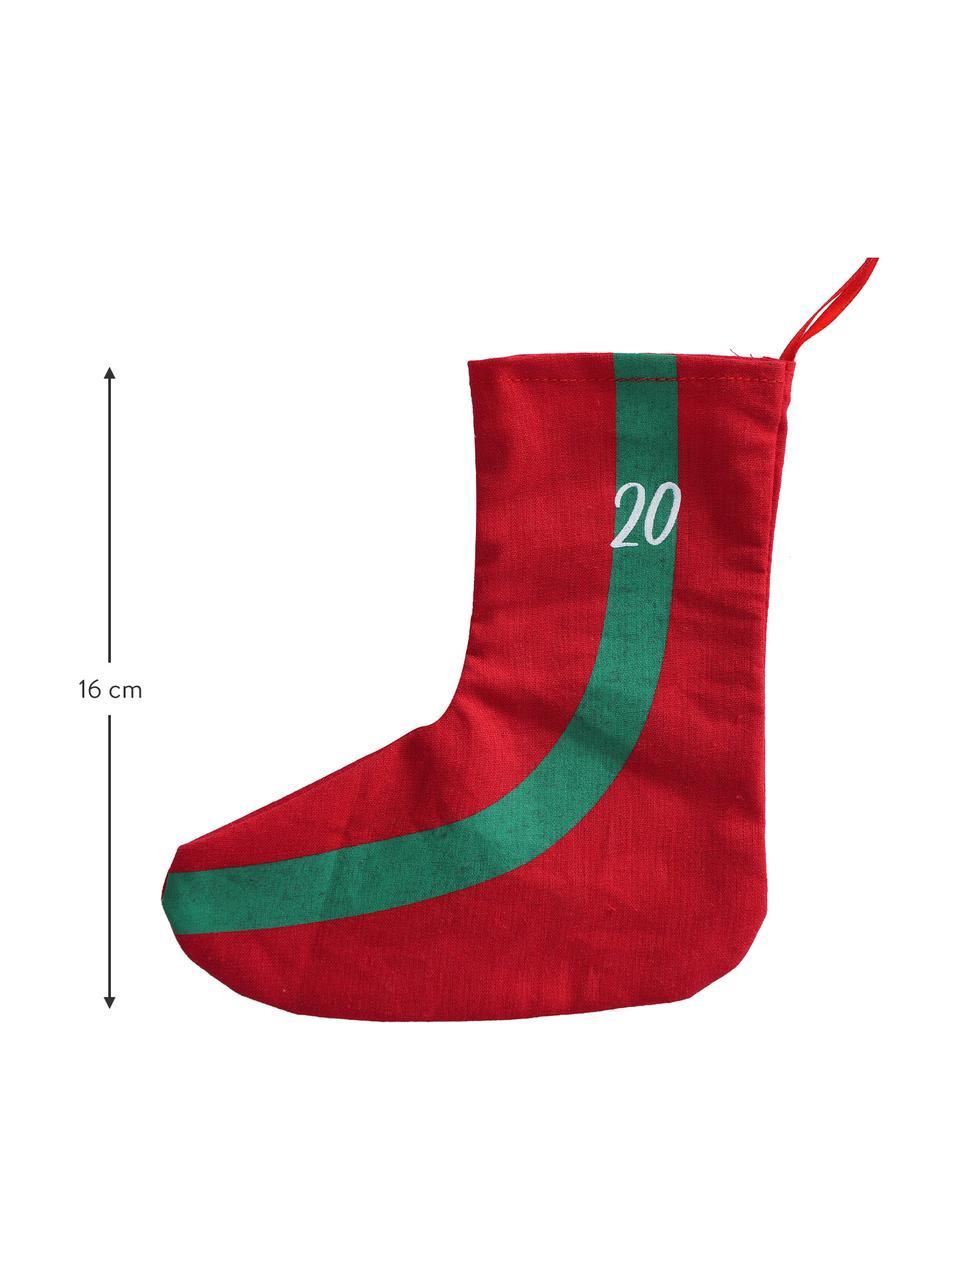 Adventskalender Socky, 280 cm, Filz, Dunkelgrün, Rot, Weiß, L 280 cm